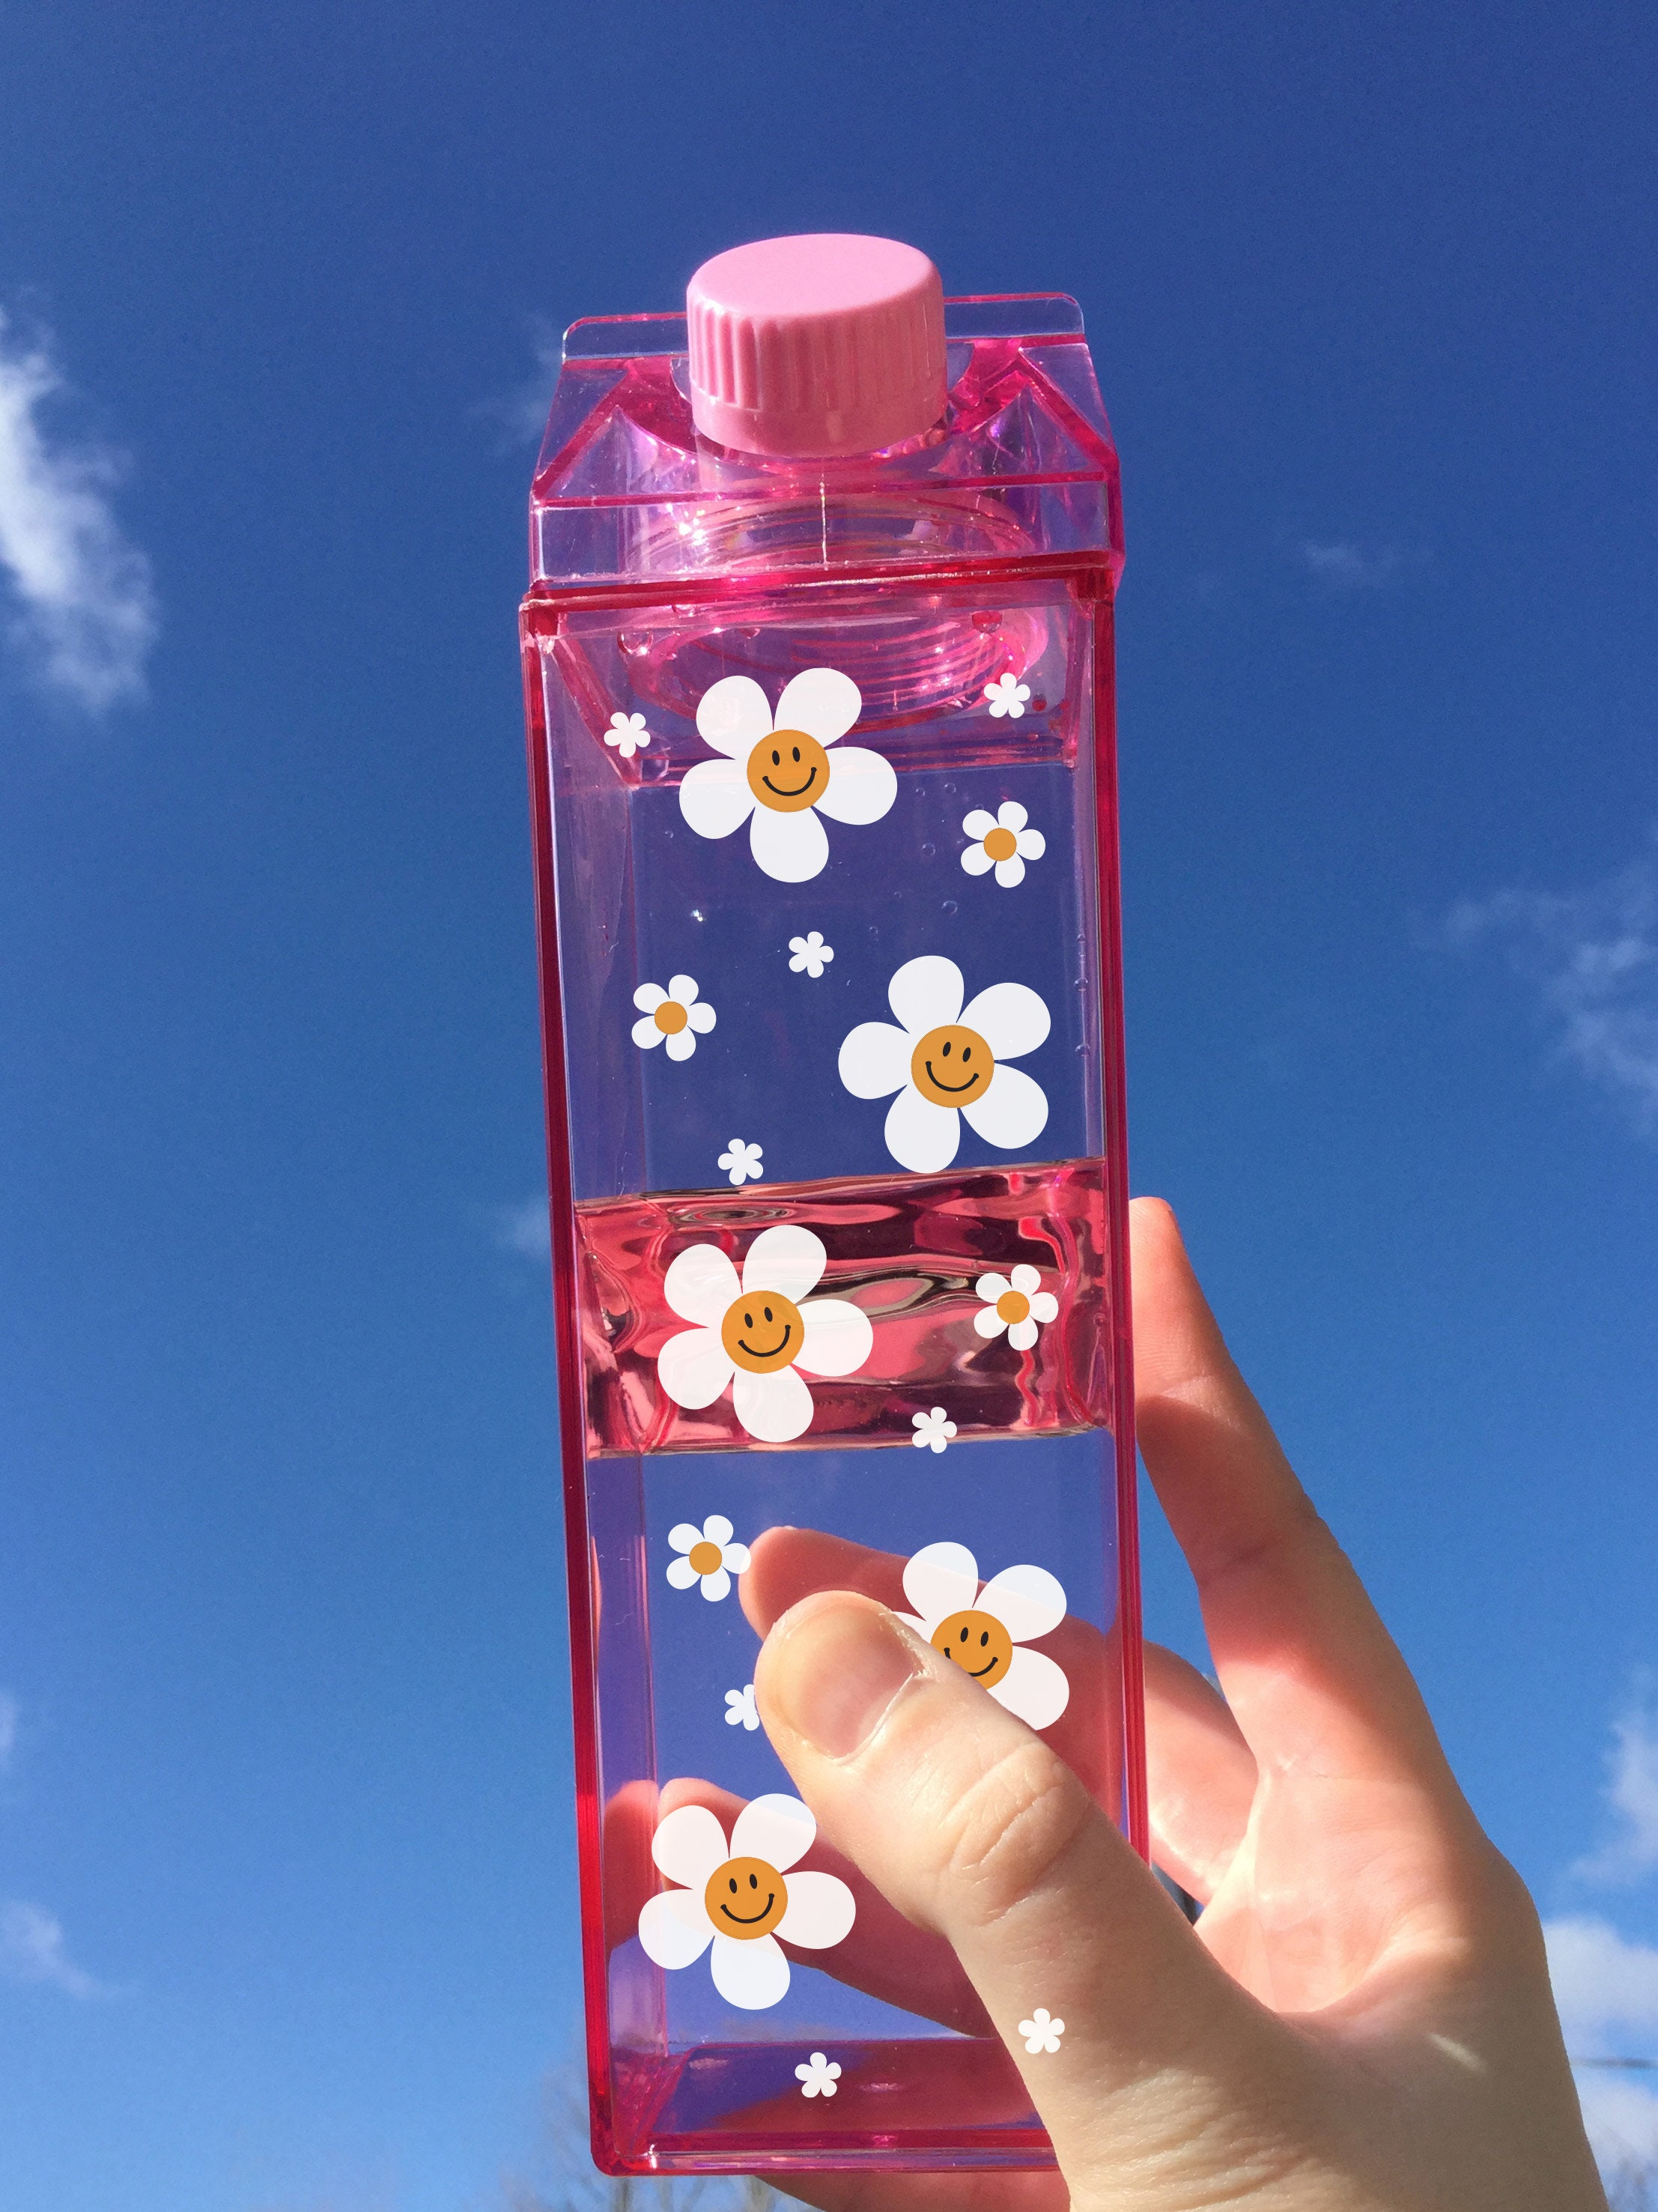 curatedhomebyjn - Aesthetic Milk Carton Water Bottle 😍